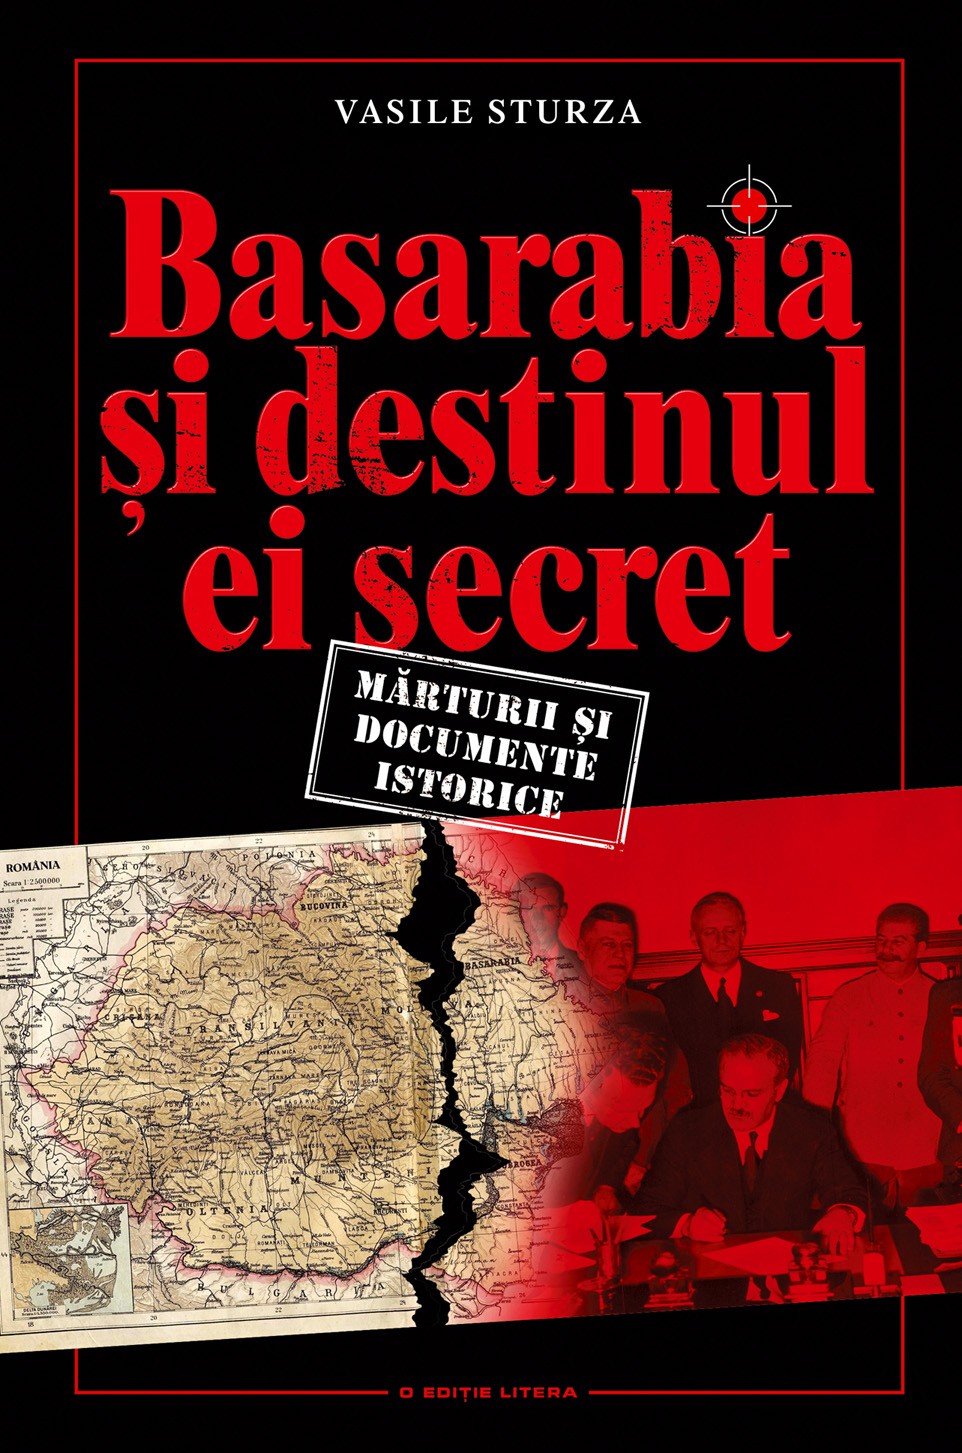 Basarabia si destinul ei secret | Vasile Sturza Basarabia imagine 2022